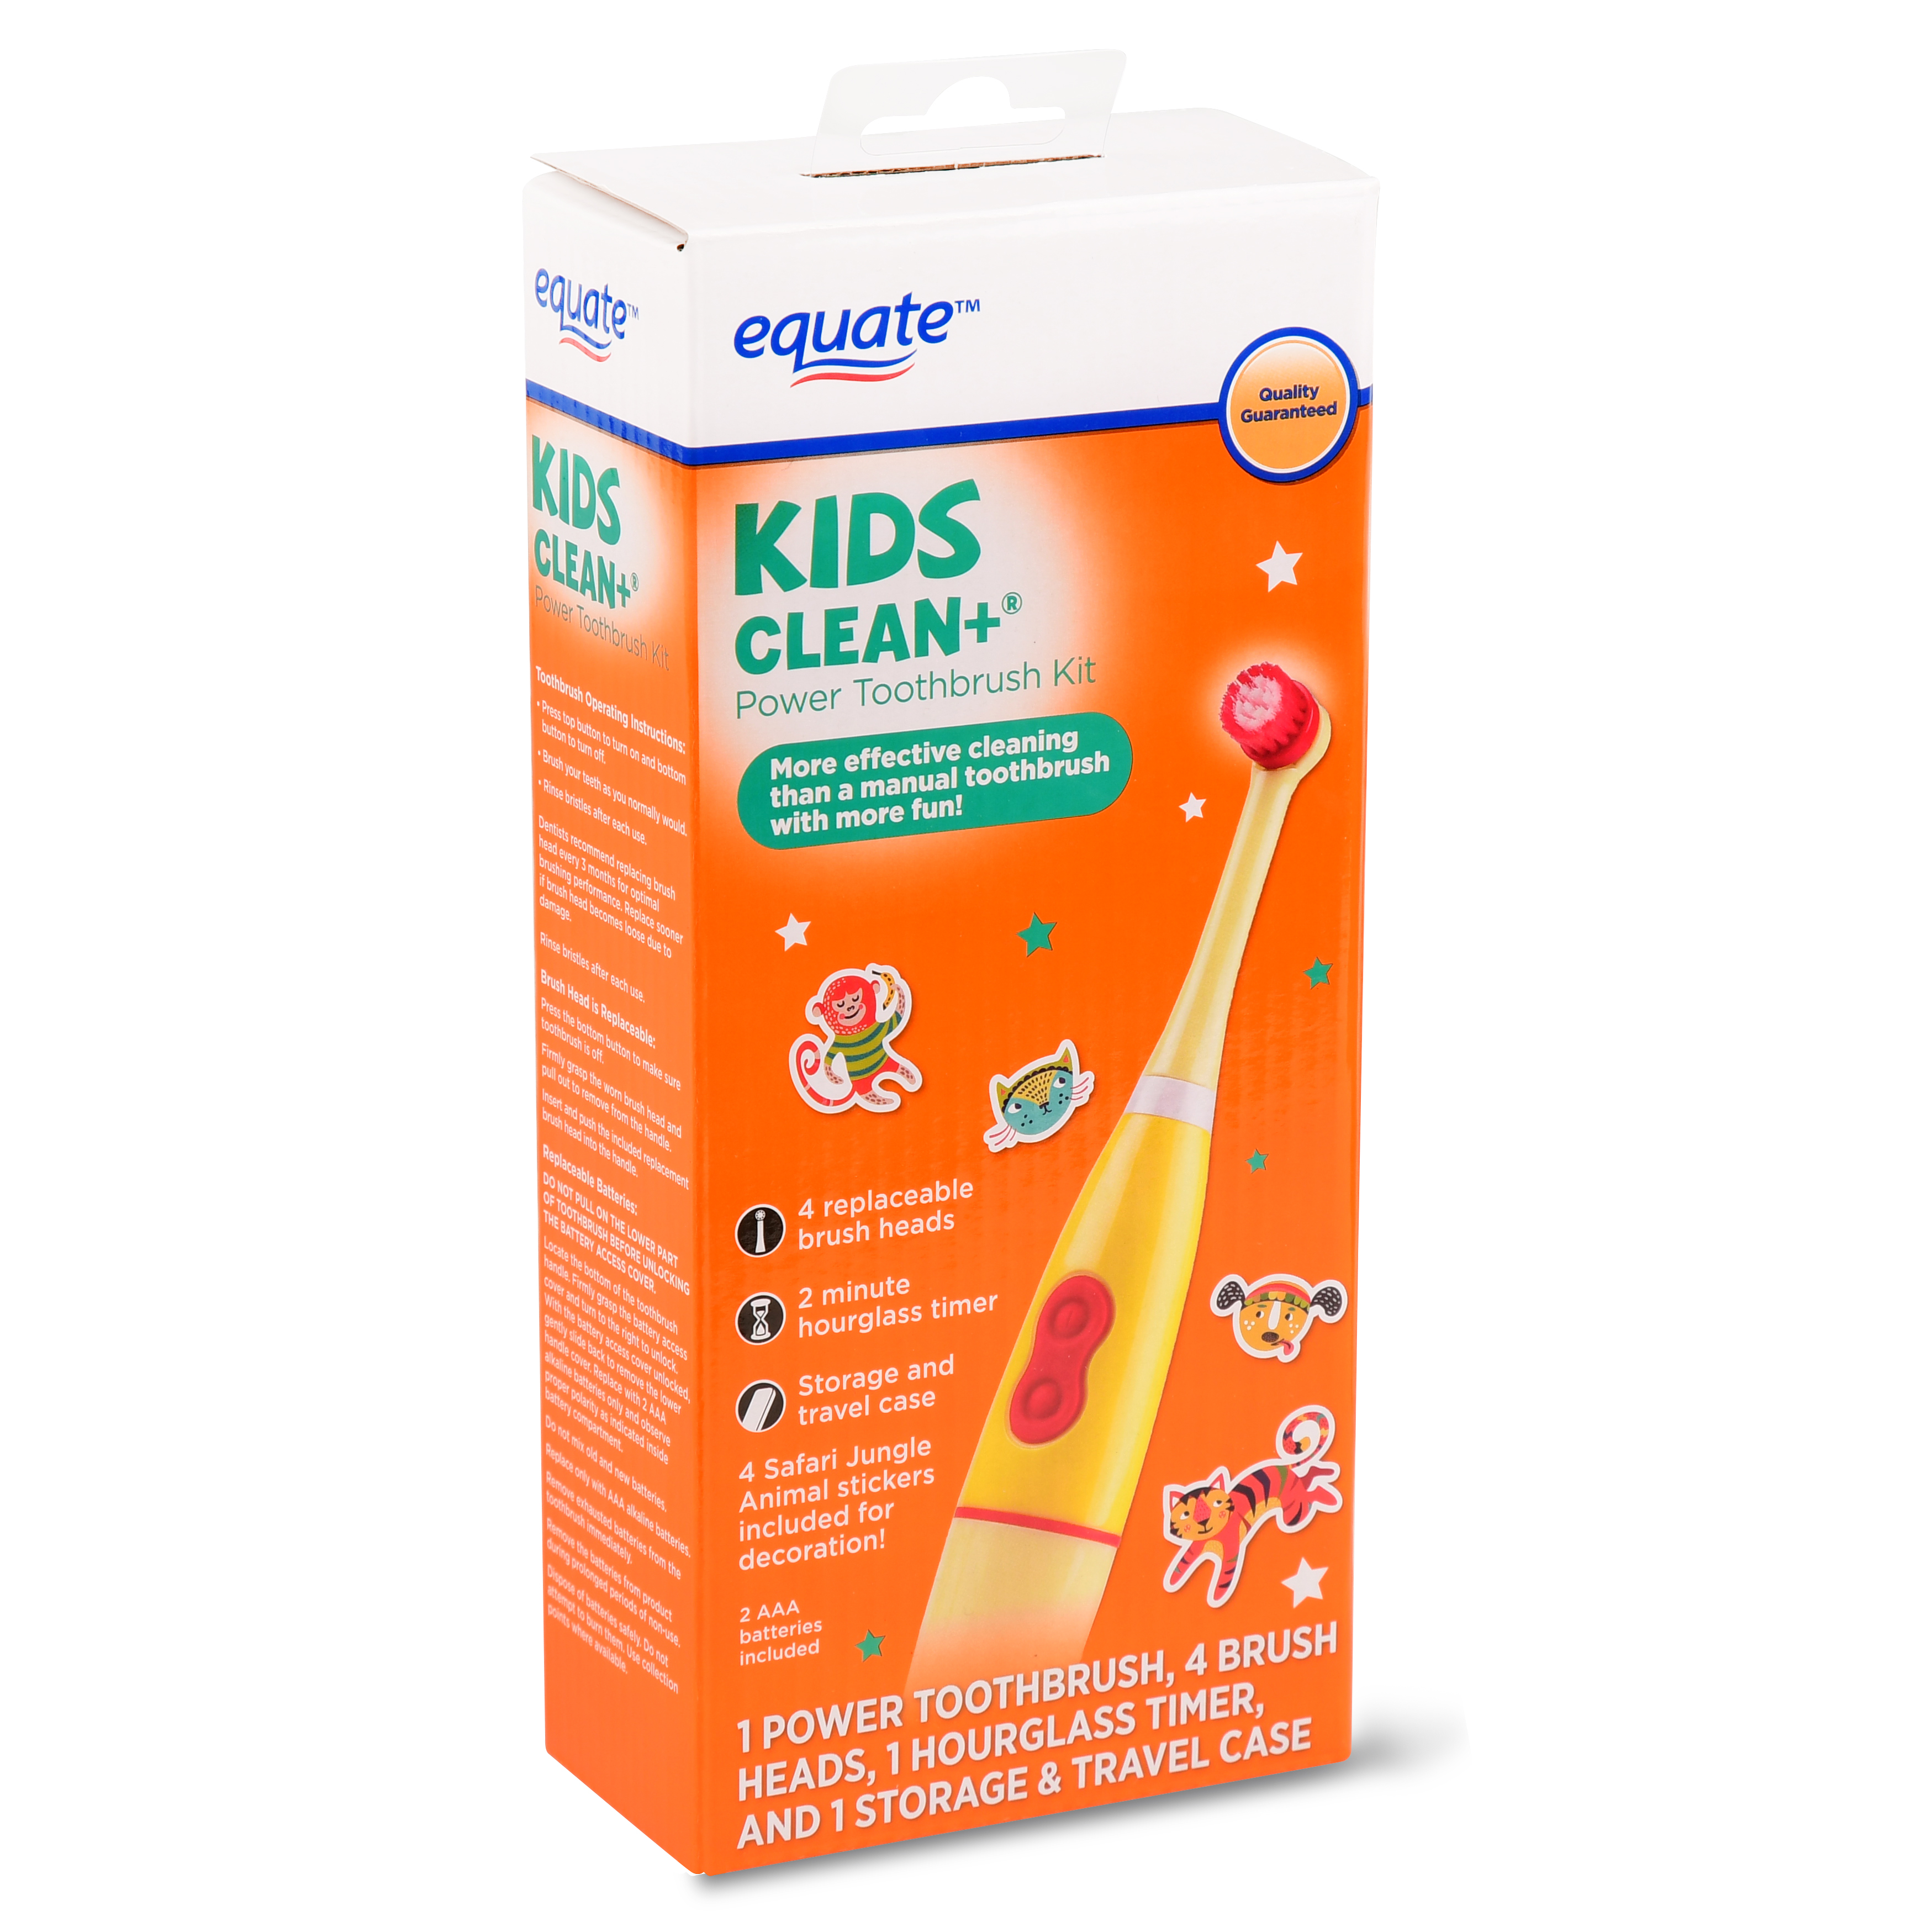 Equate Kids Clean+ Power Toothbrush Kit - image 2 of 8